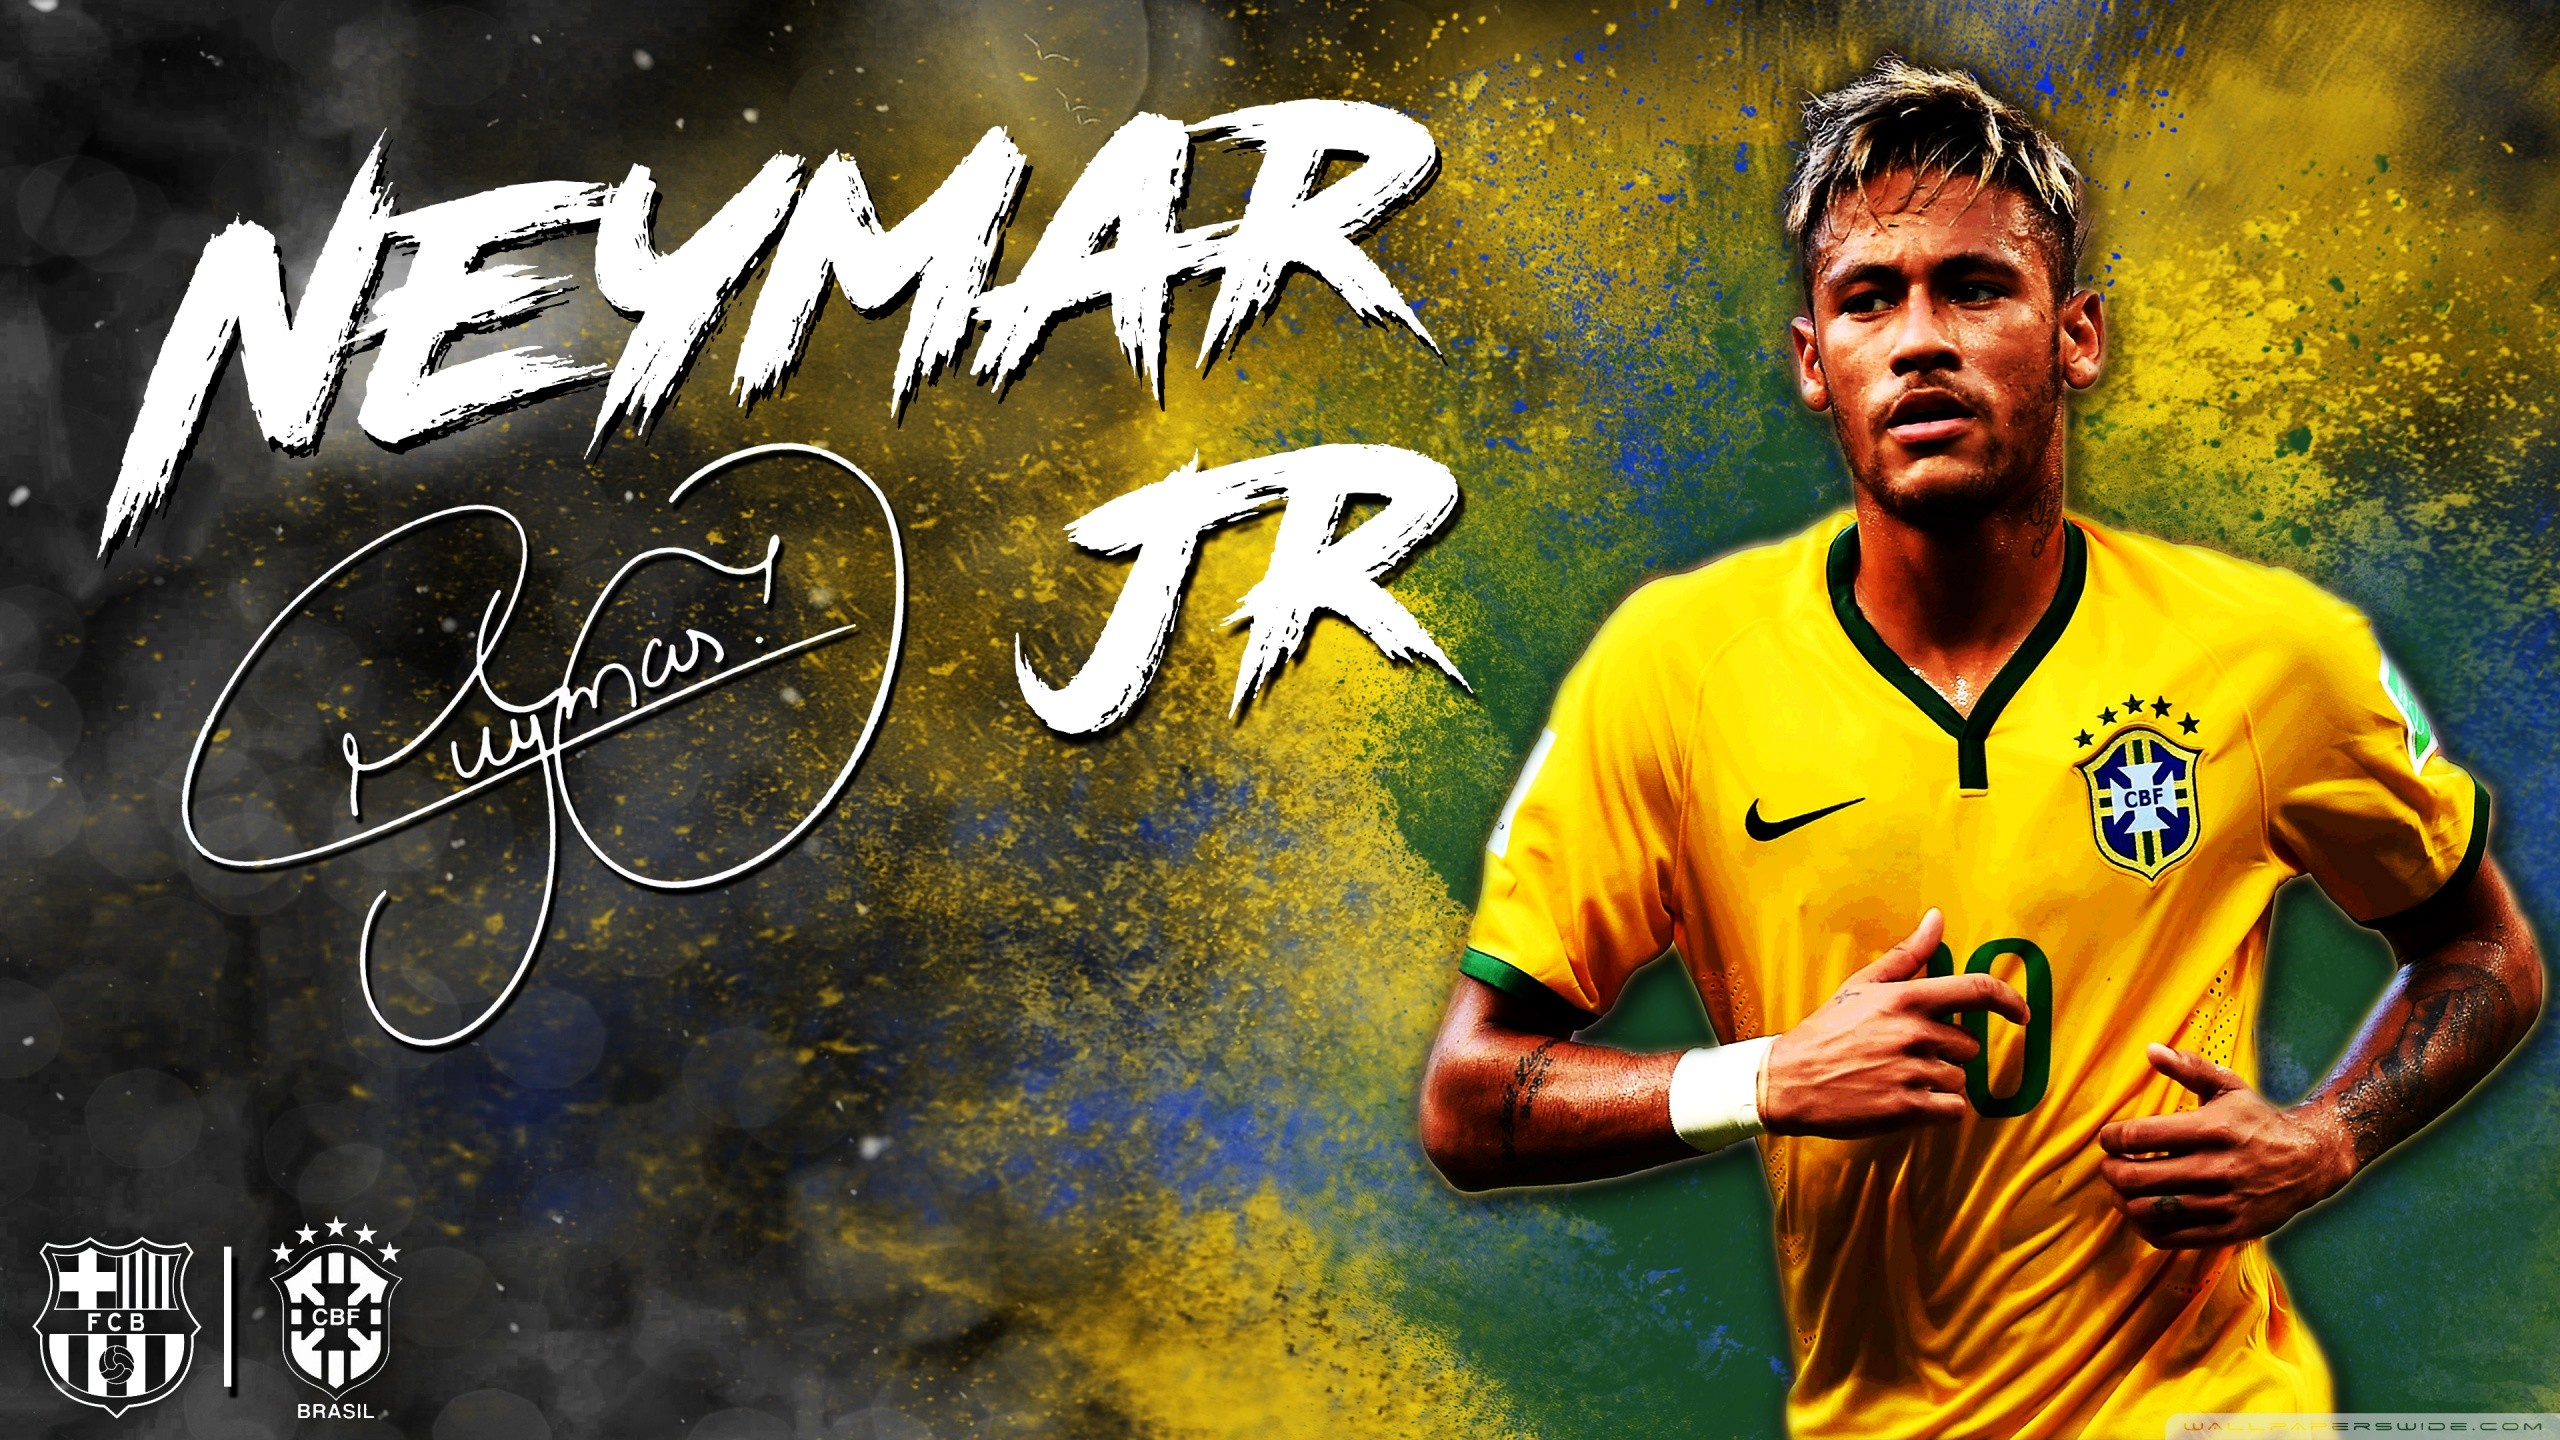 Neymar Jr Wallpapers 2022 Wallpaper Cave Source Hd 16 9 2560x1440